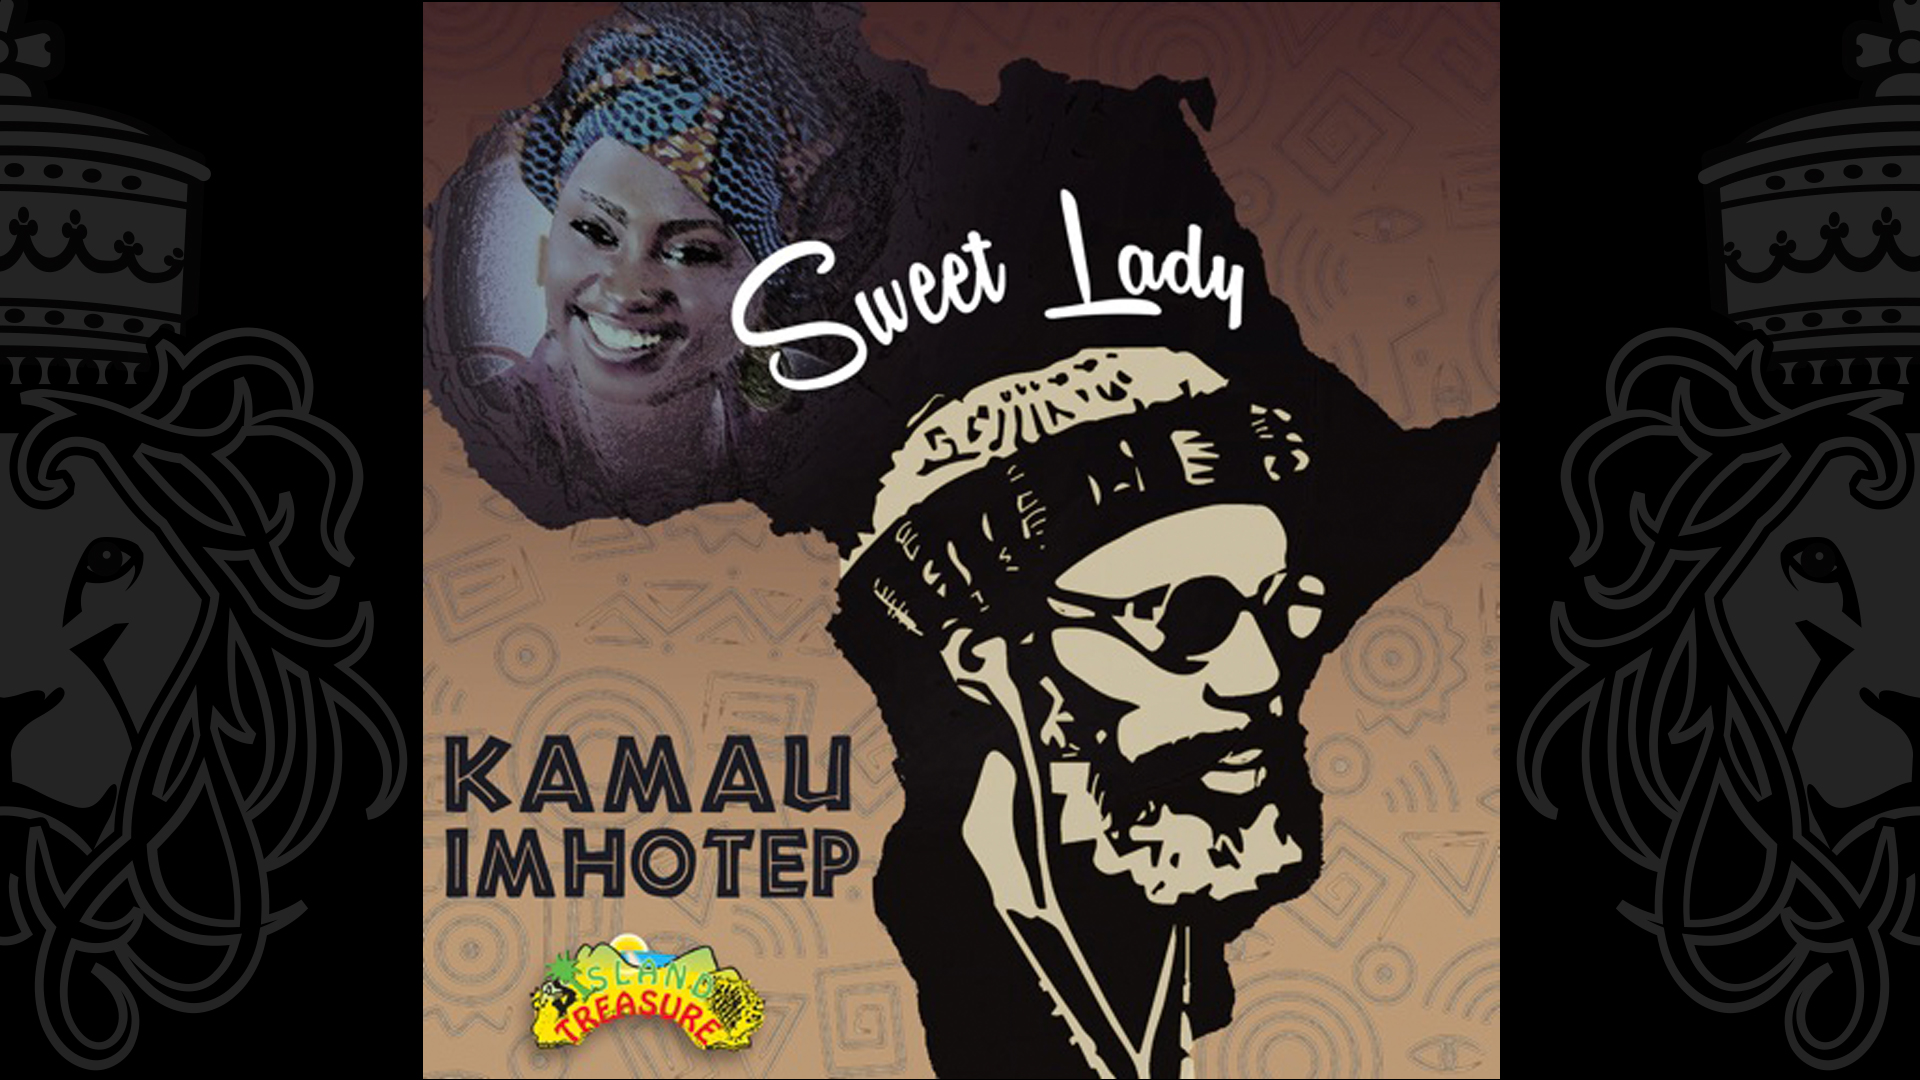 Kamau Imhotep - sweet lady